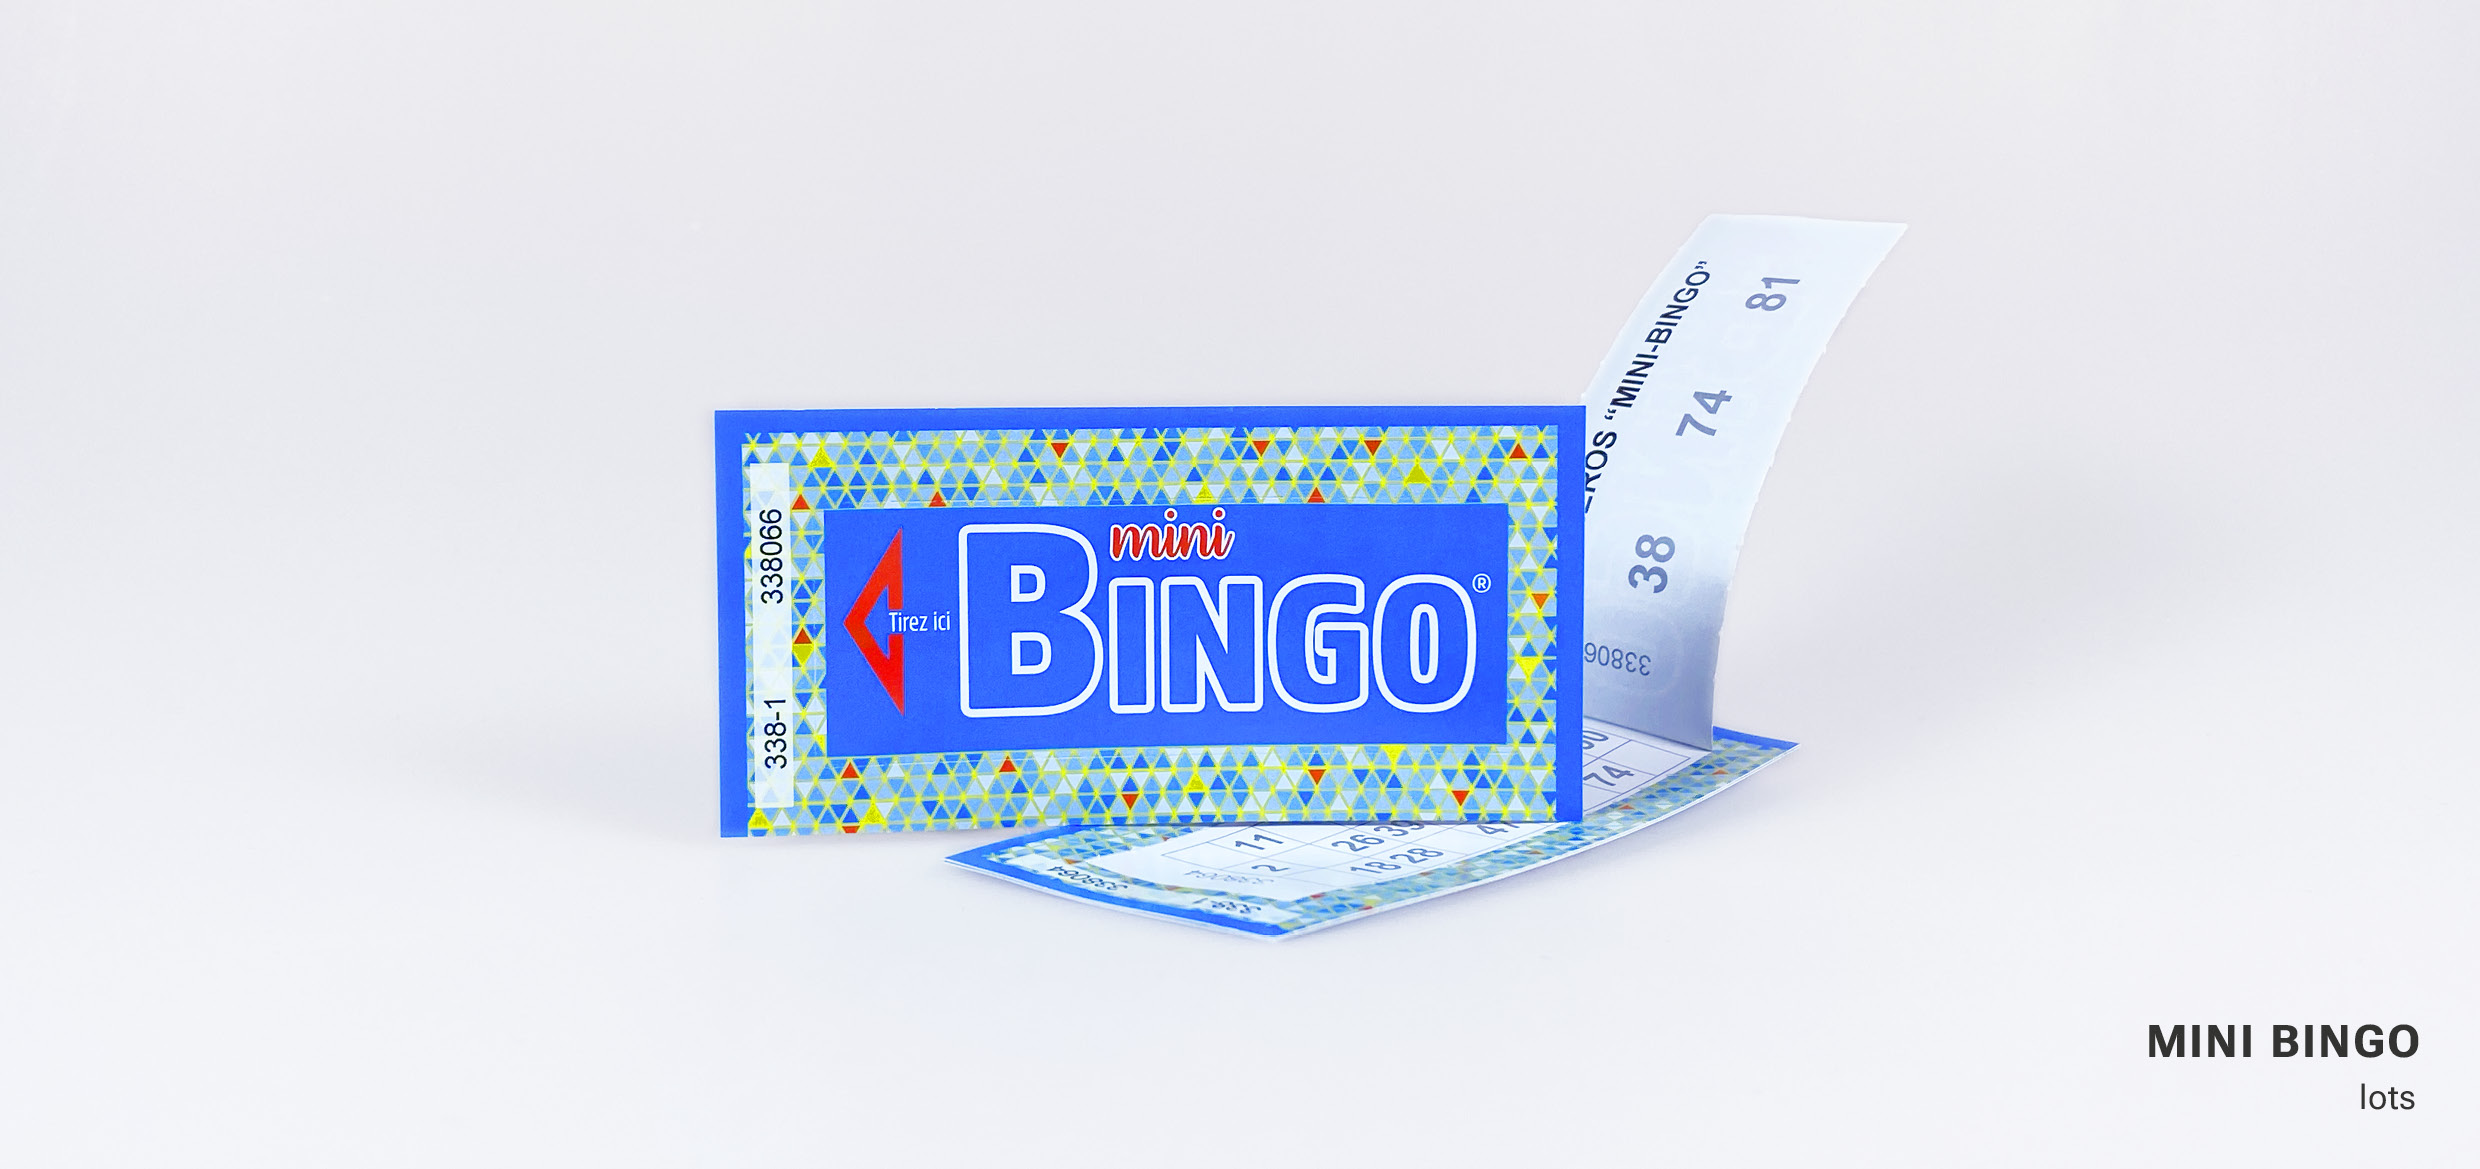 Mini Bingo lots